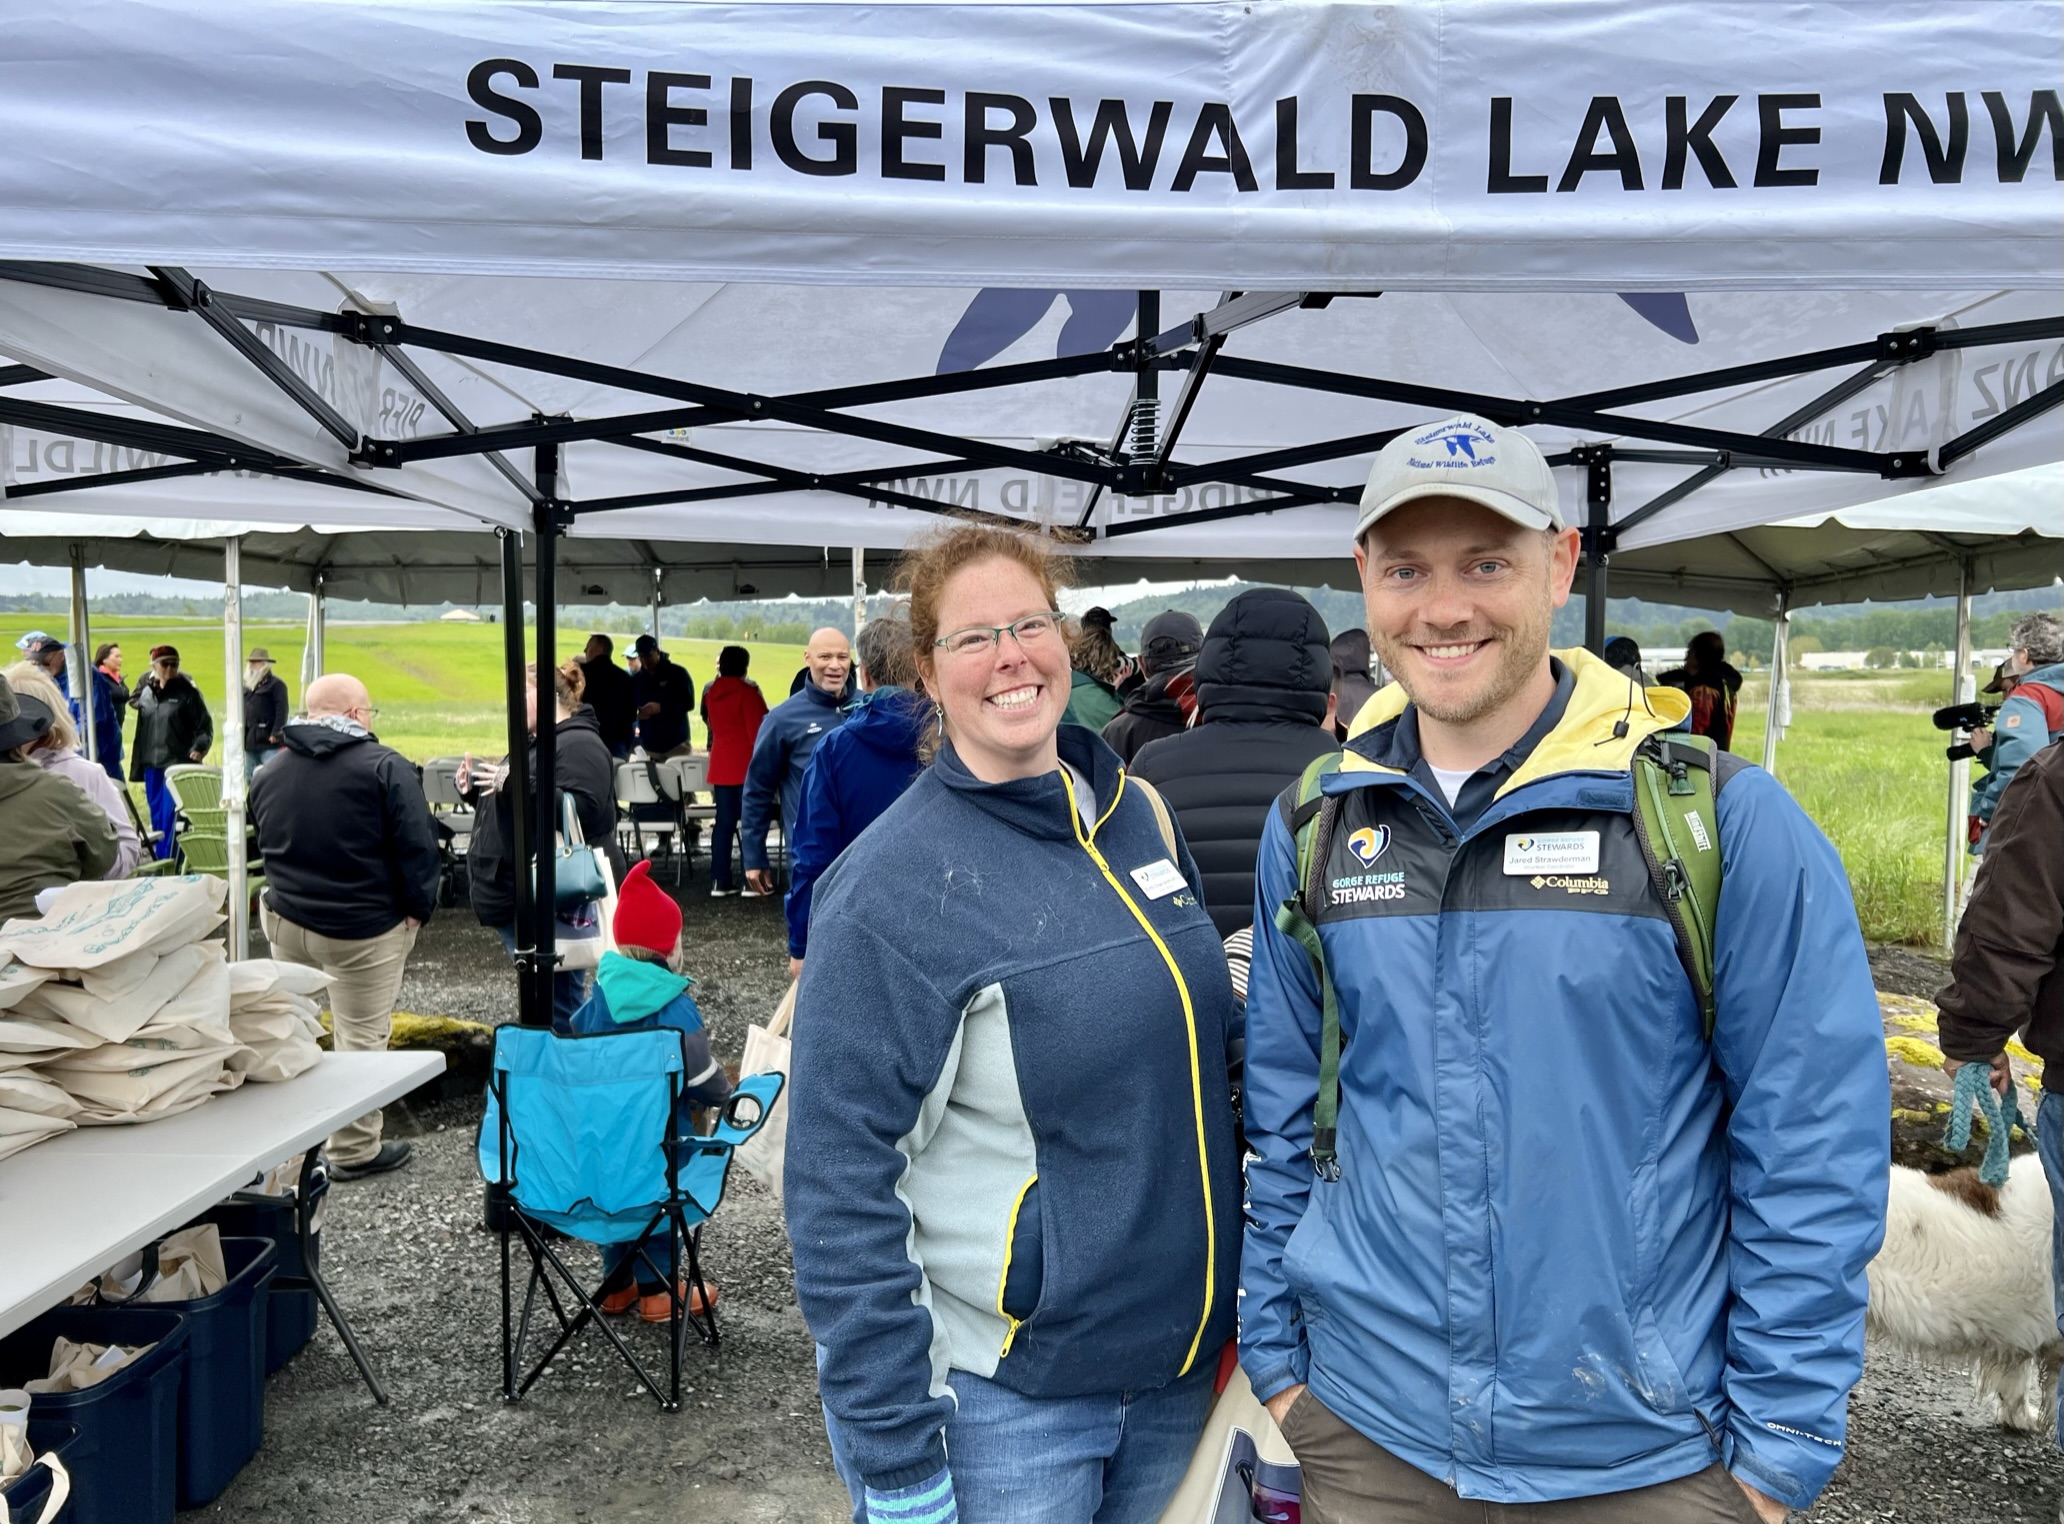 Brette Greenwood-Wing and Jared Strawderman of the Gorge Refuge Stewards